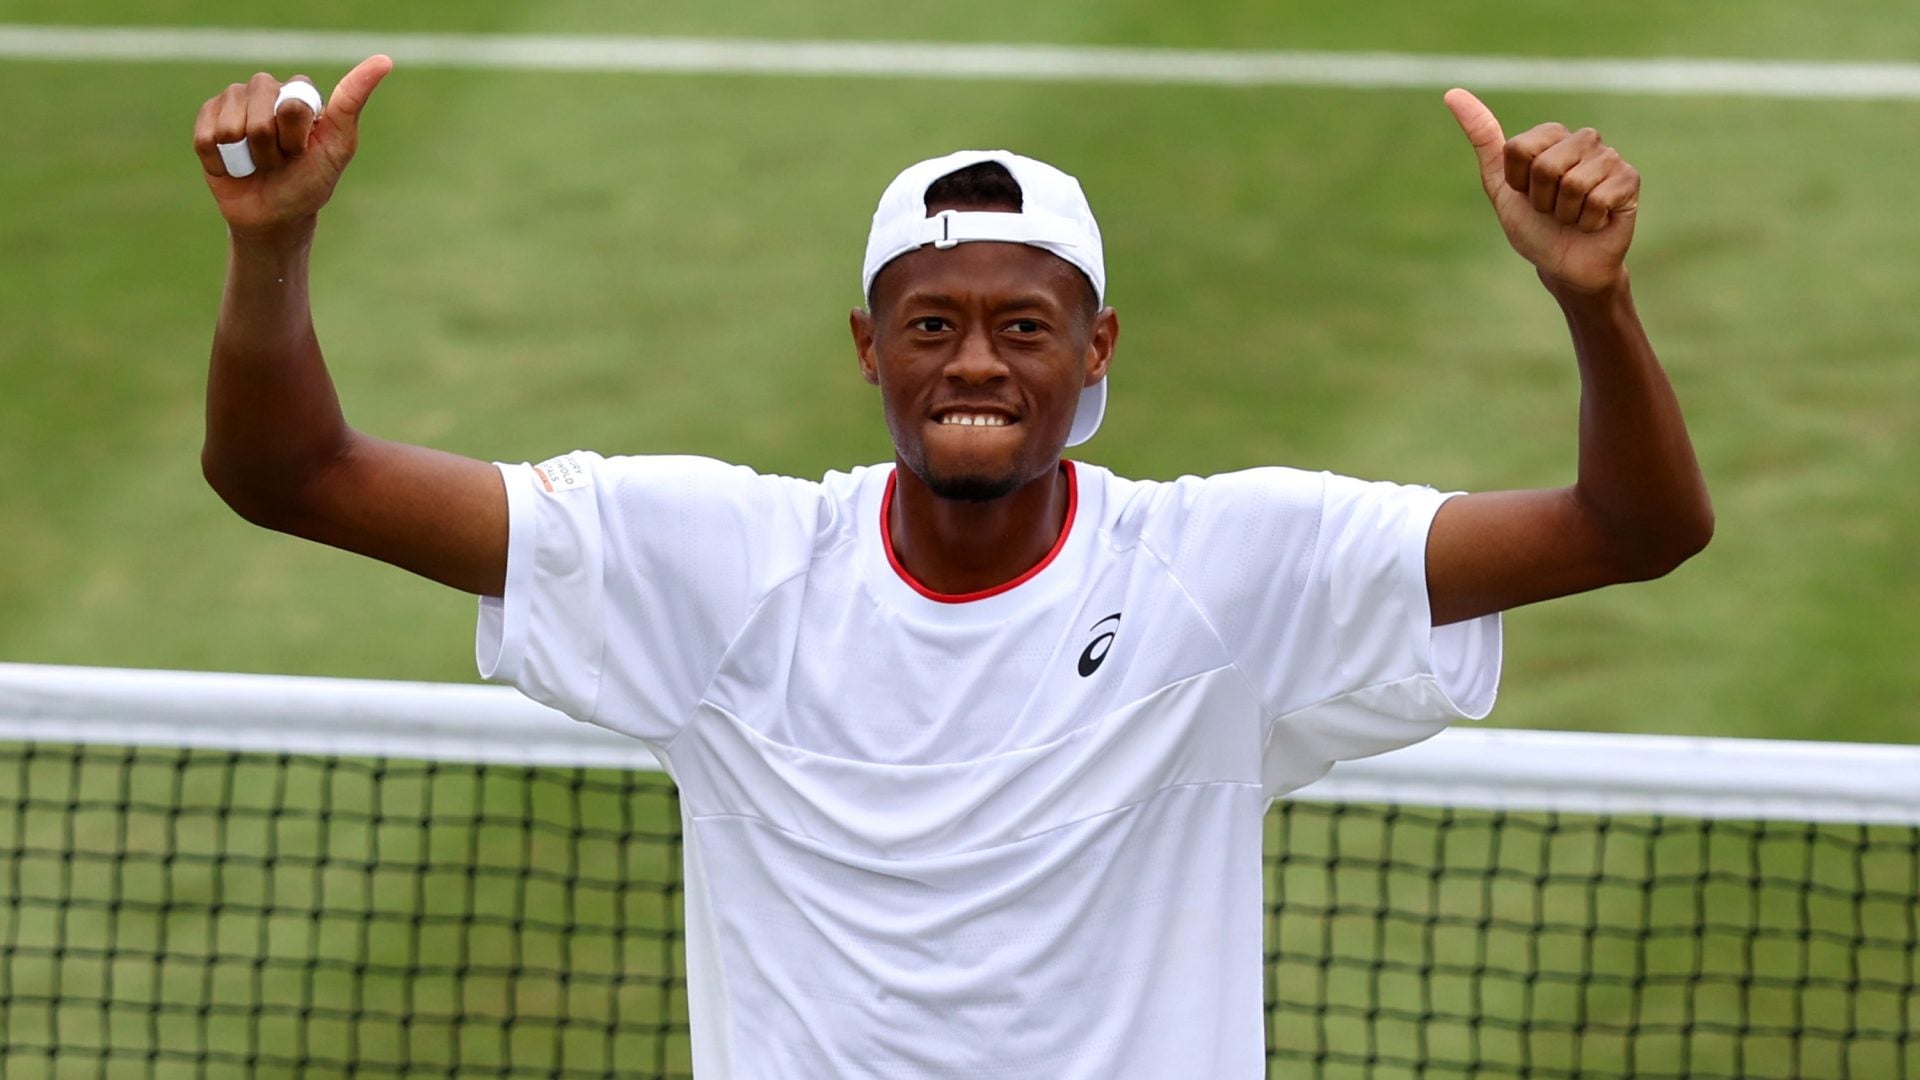 “Living A Dream”: Christopher Eubanks Is Breakout Star At 2023 Wimbledon